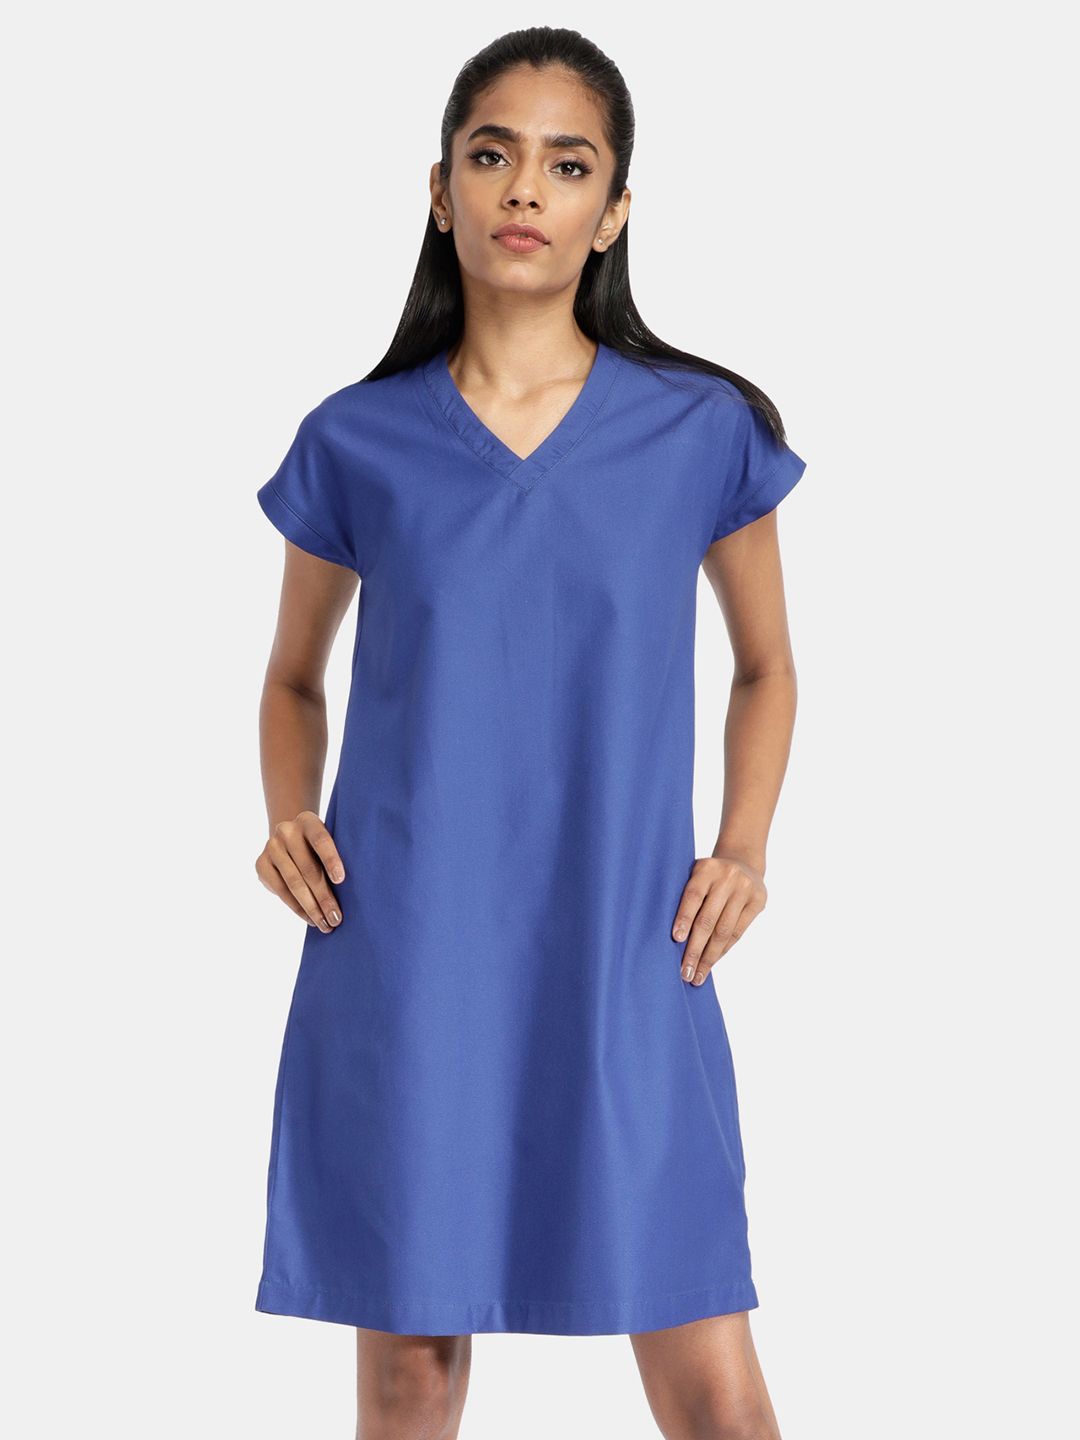 What Color Makeup Should I Wear With A Cobalt Blue Dress - Mugeek ...